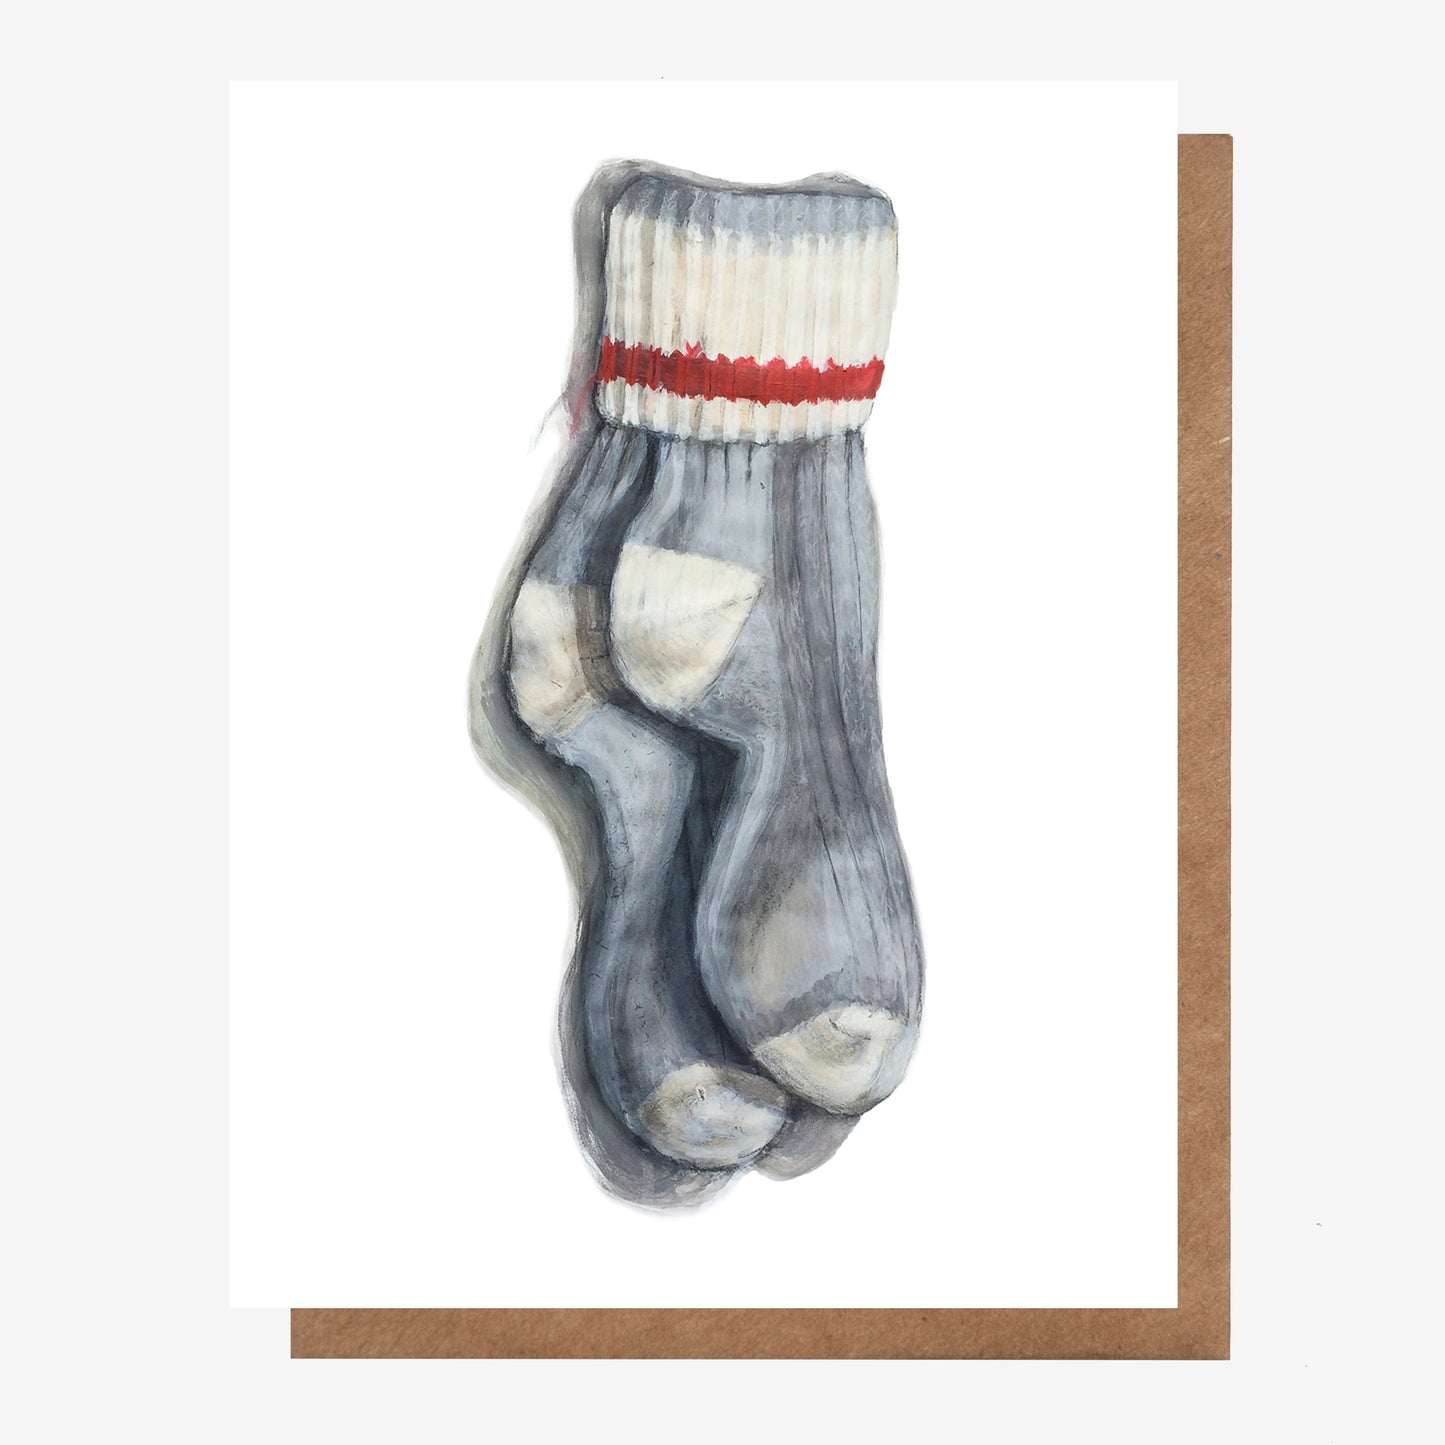 Hand drawn Canadian wool socks greeting card, made in Nova Scotia, Canada by Coastal Card Co.